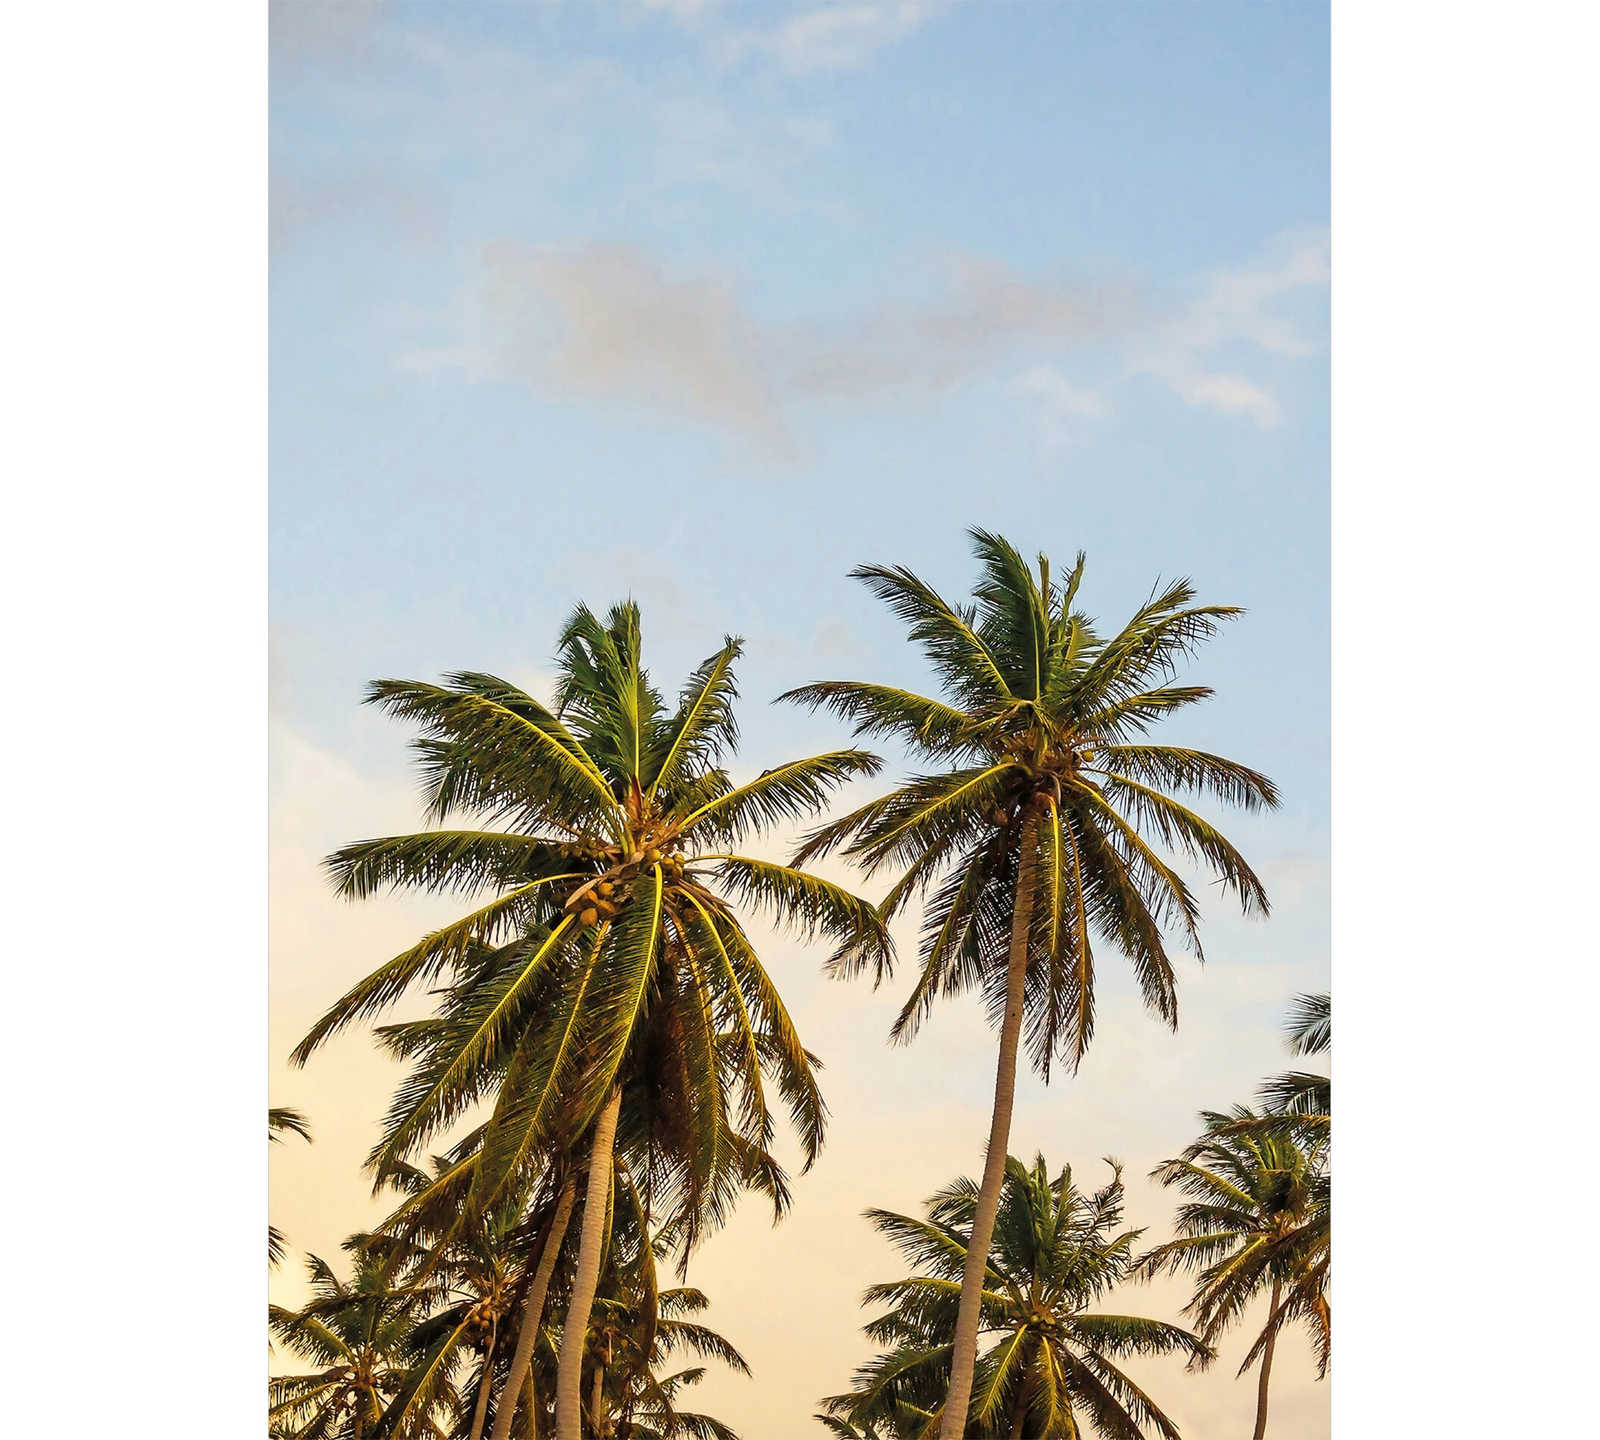         Fototapete schmal Palmen auf Ibiza
    